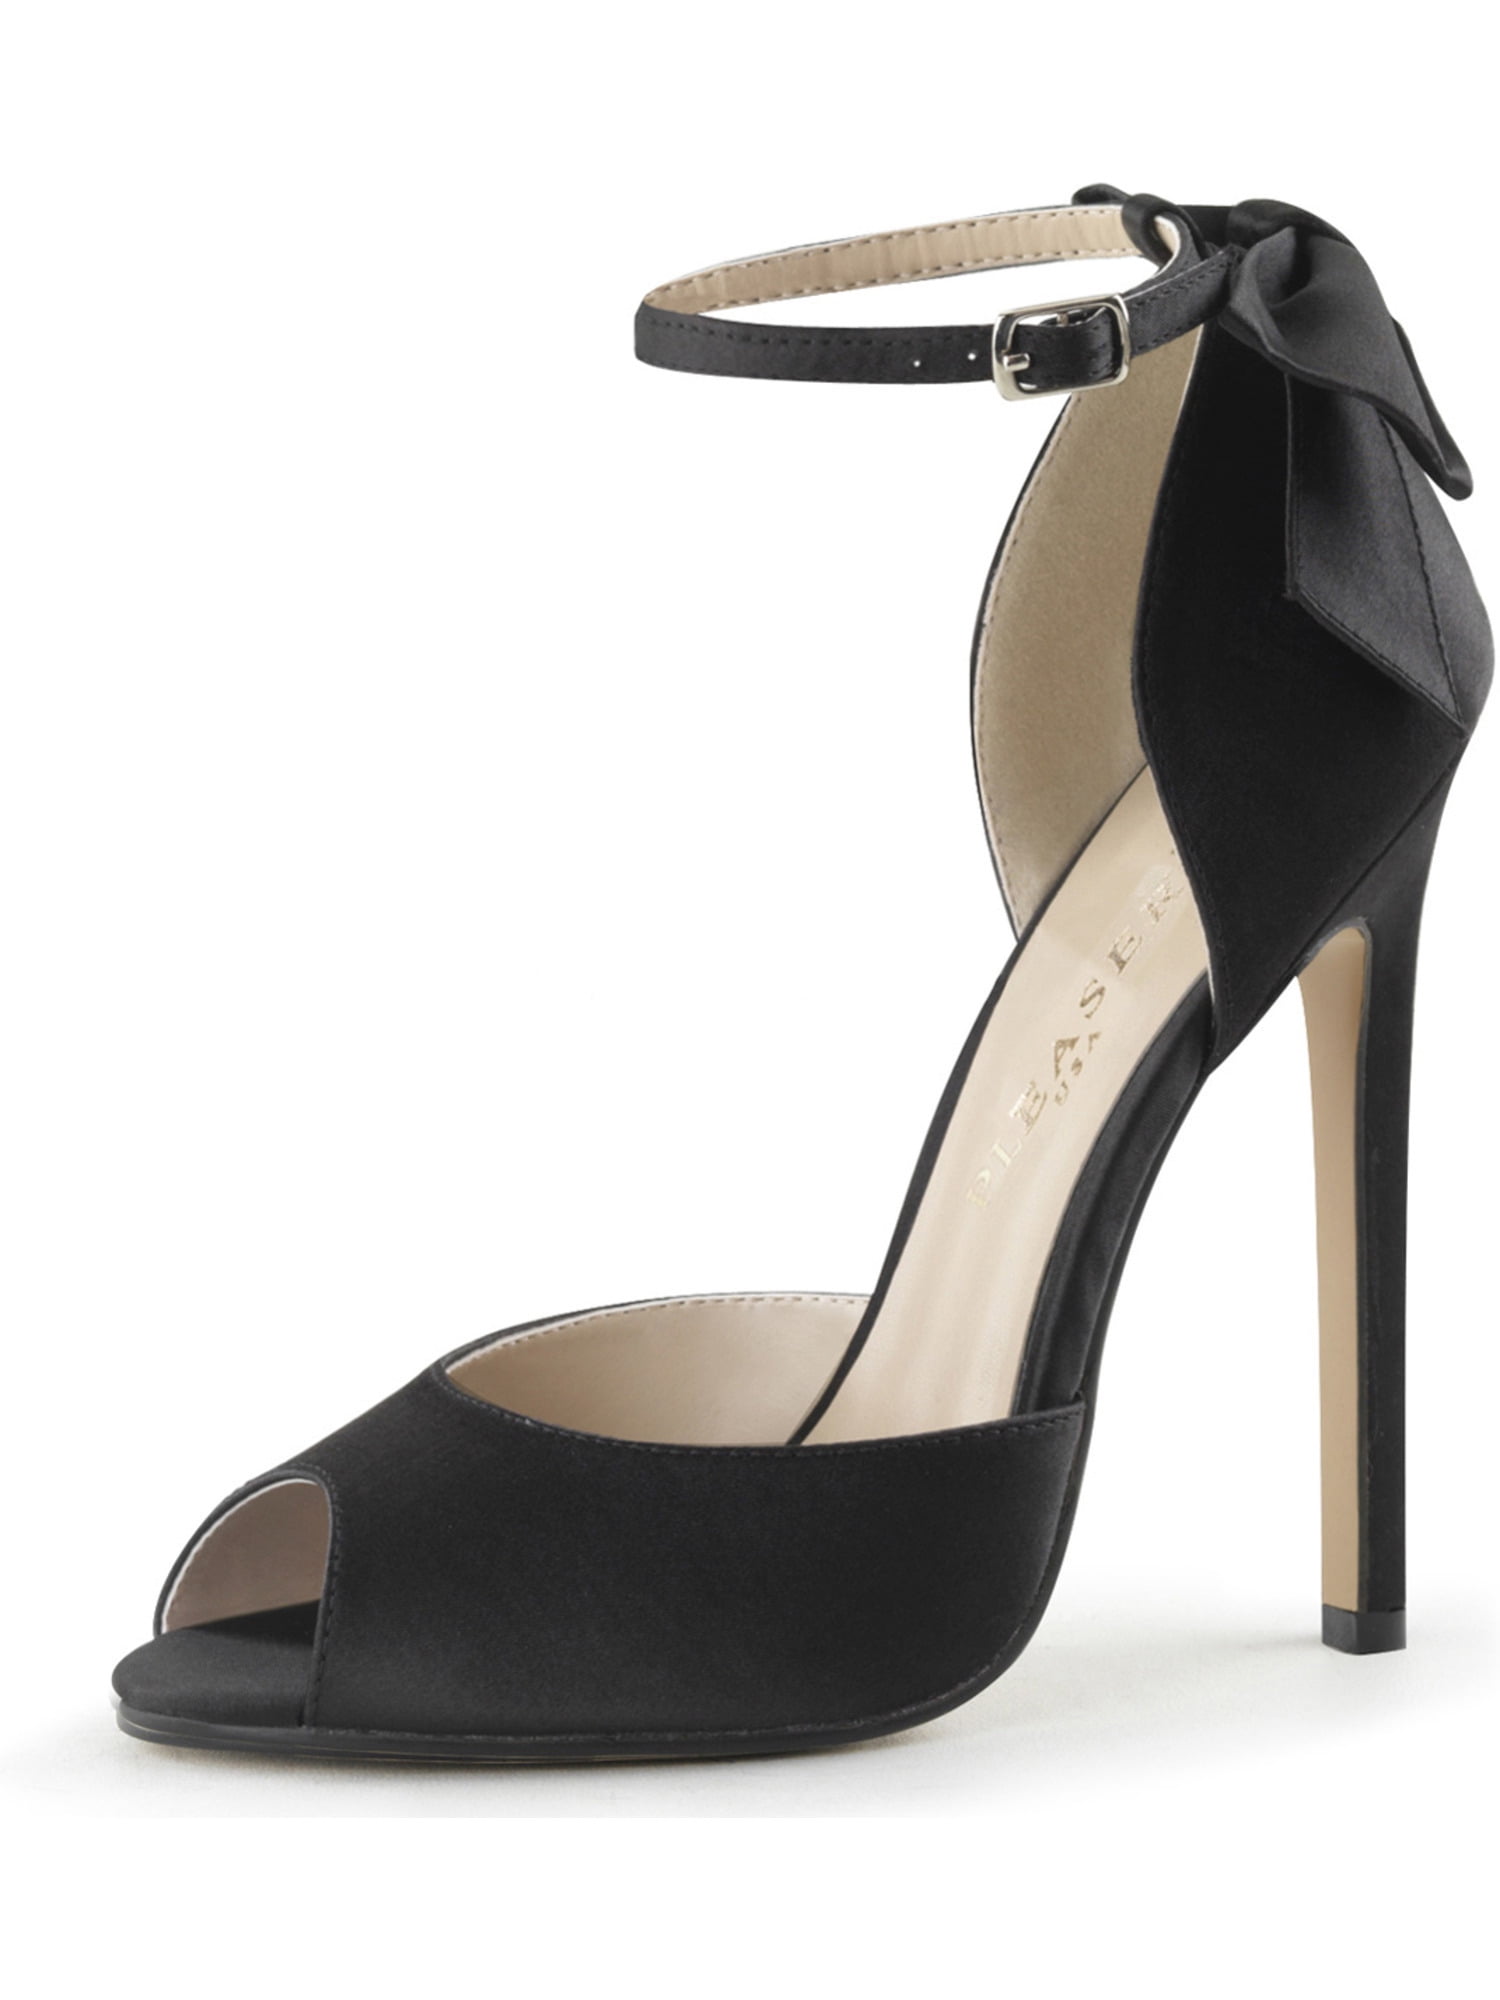 Pleaser - Womens Black Strap Heels D'Orsay Pumps Peep Toe Shoes Bow ...